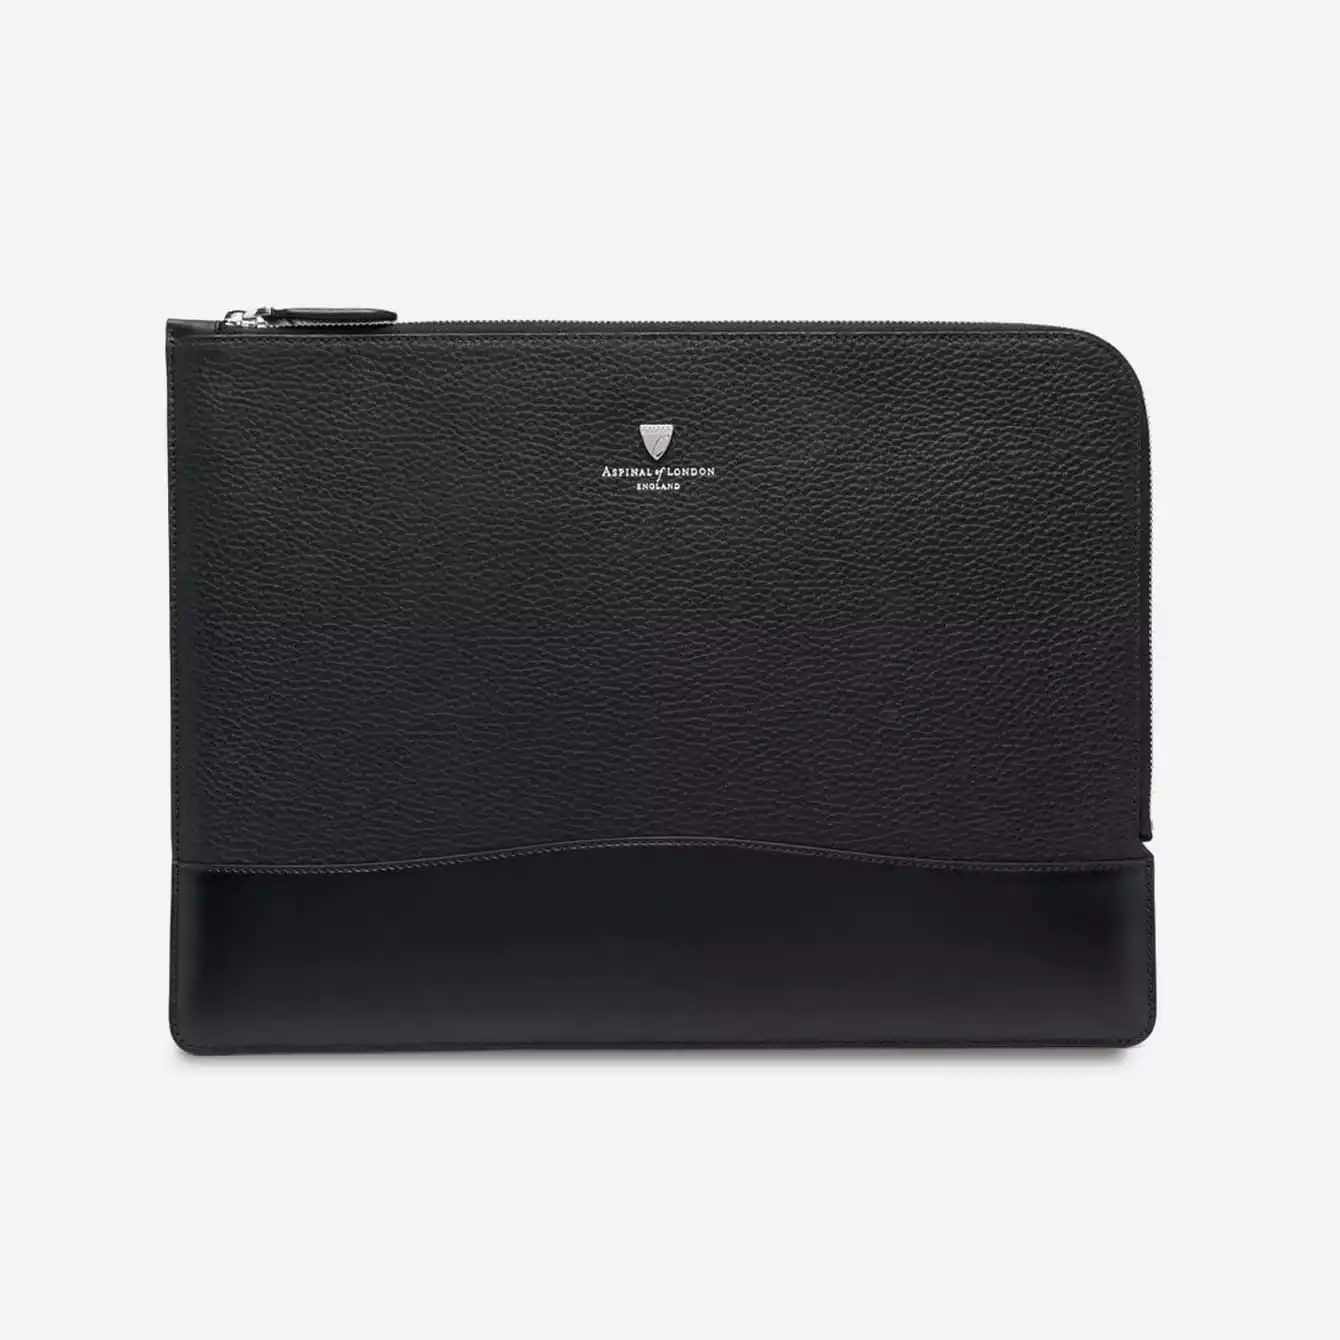 Aspinal of London - City Tech leather laptop bag